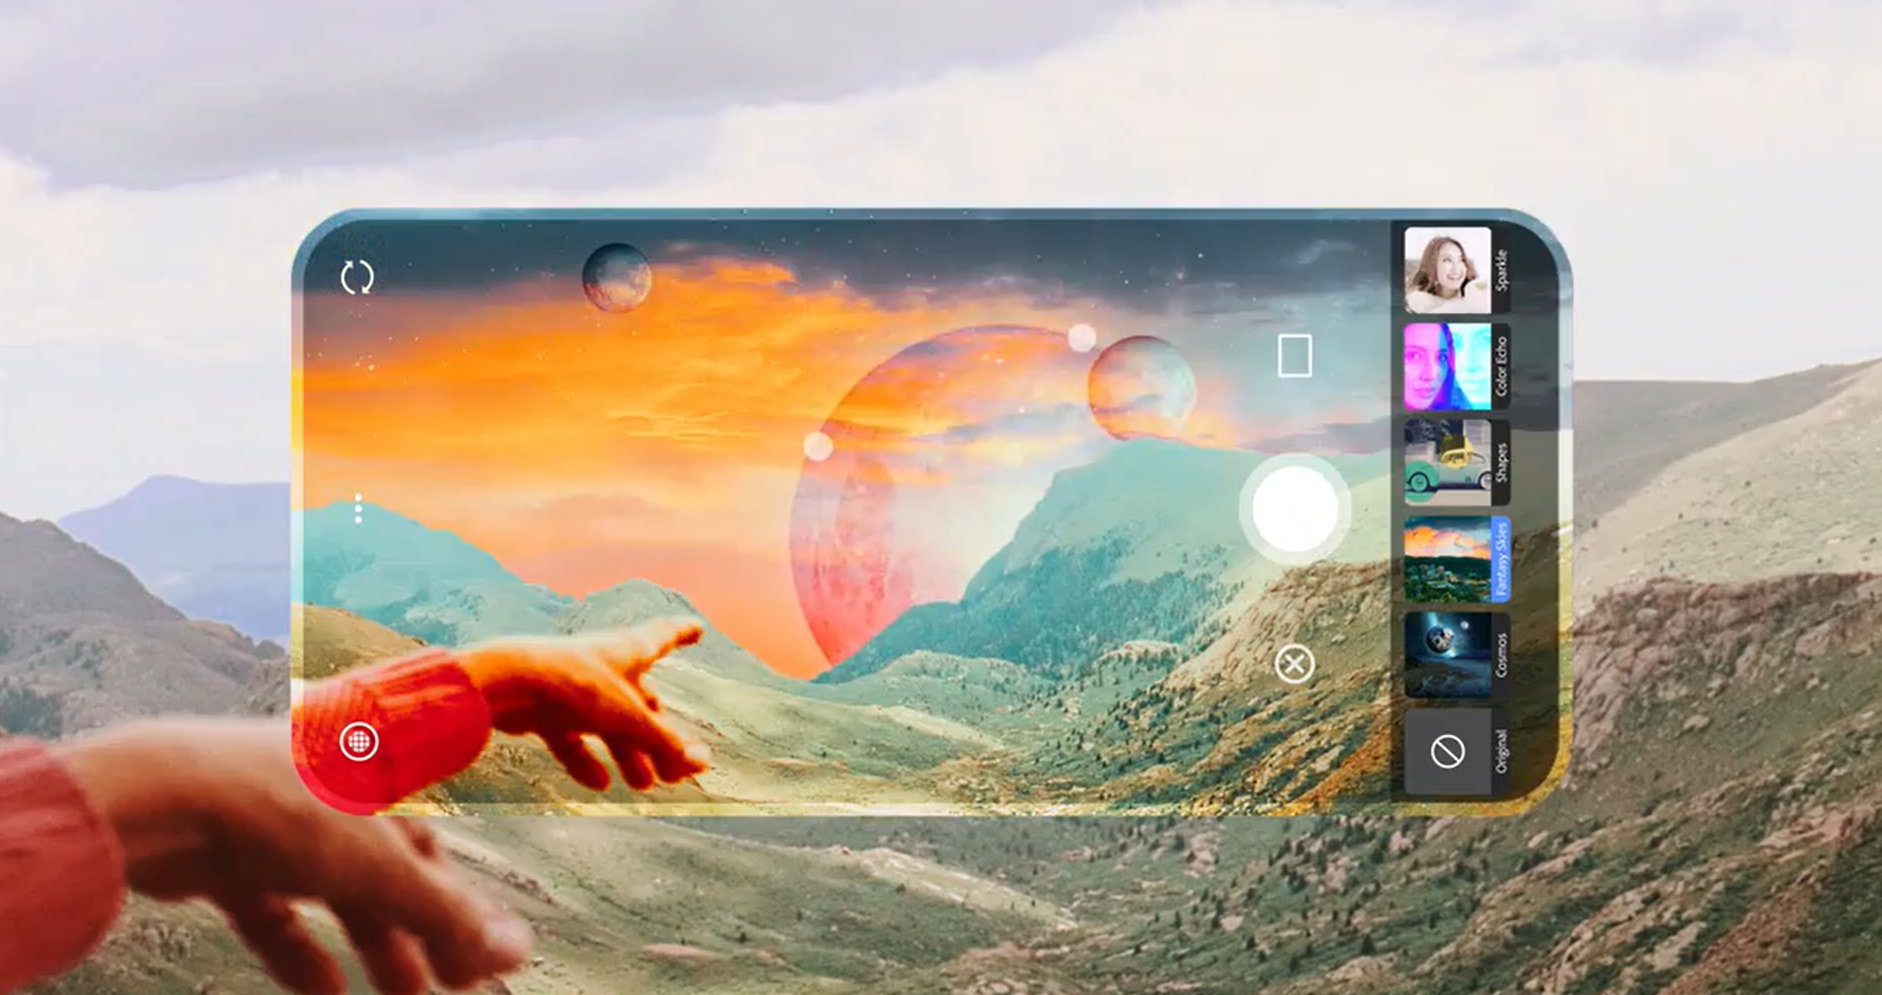 Adobe slipper Photoshop Camera til iOS og Android